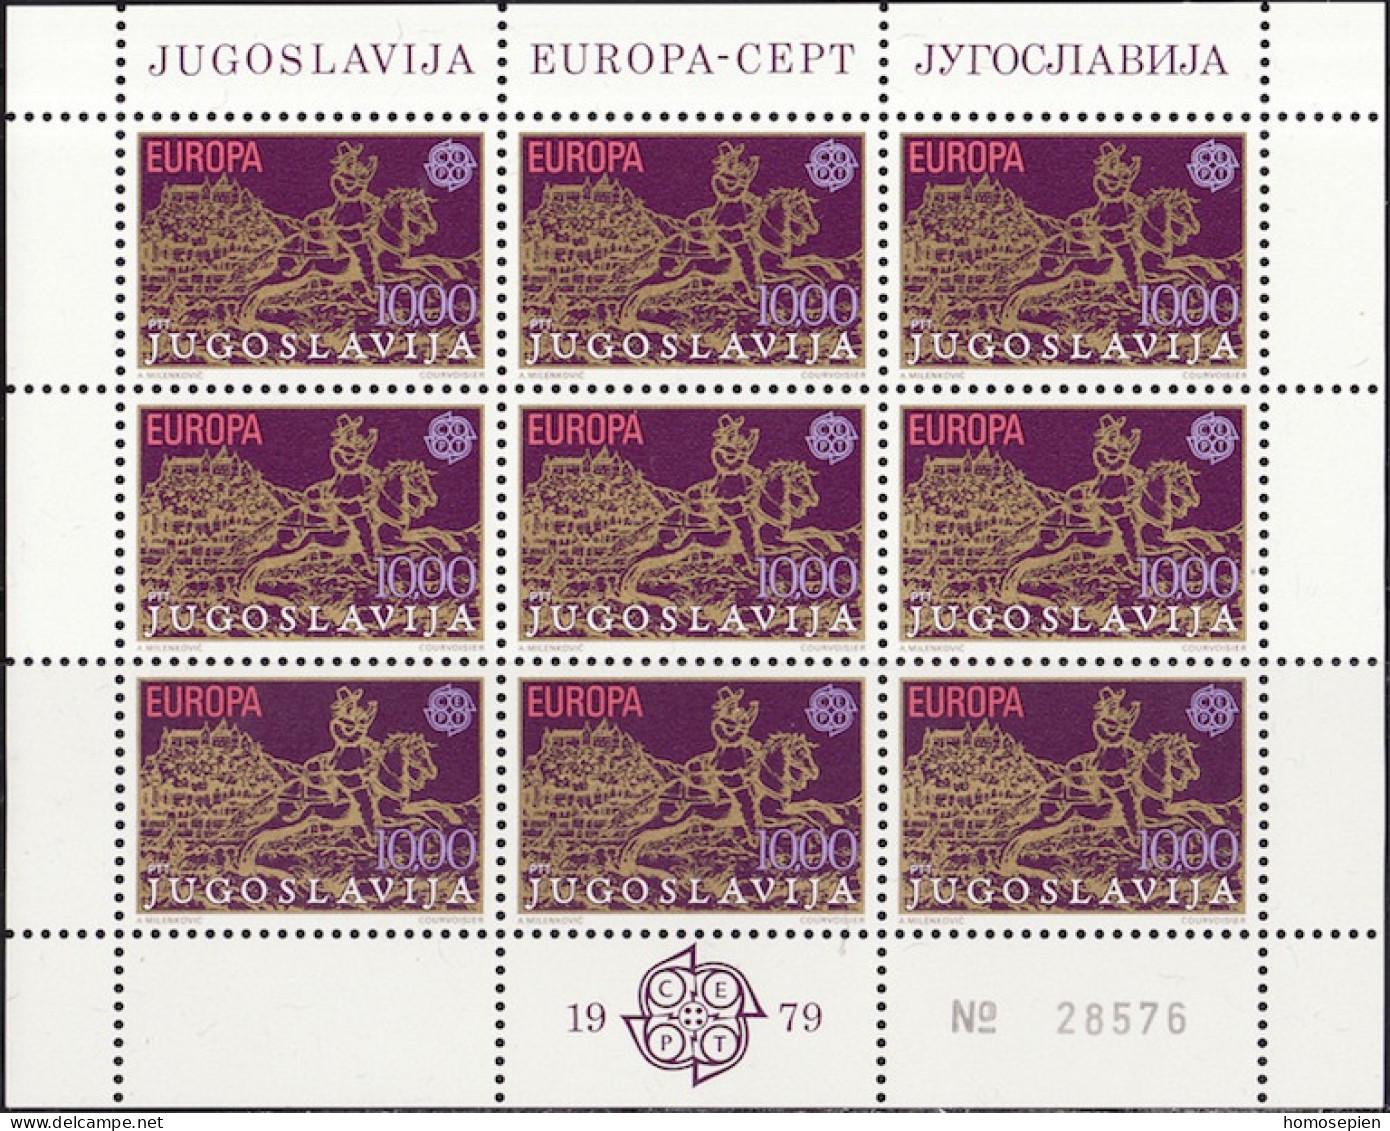 Yougoslavie - Jugoslawien - Yugoslavia Bloc Feuillet 1979 Y&T N°F1663 à F1664 - Michel N°KB1787 à KB1788 *** - EUROPA - Blocks & Sheetlets